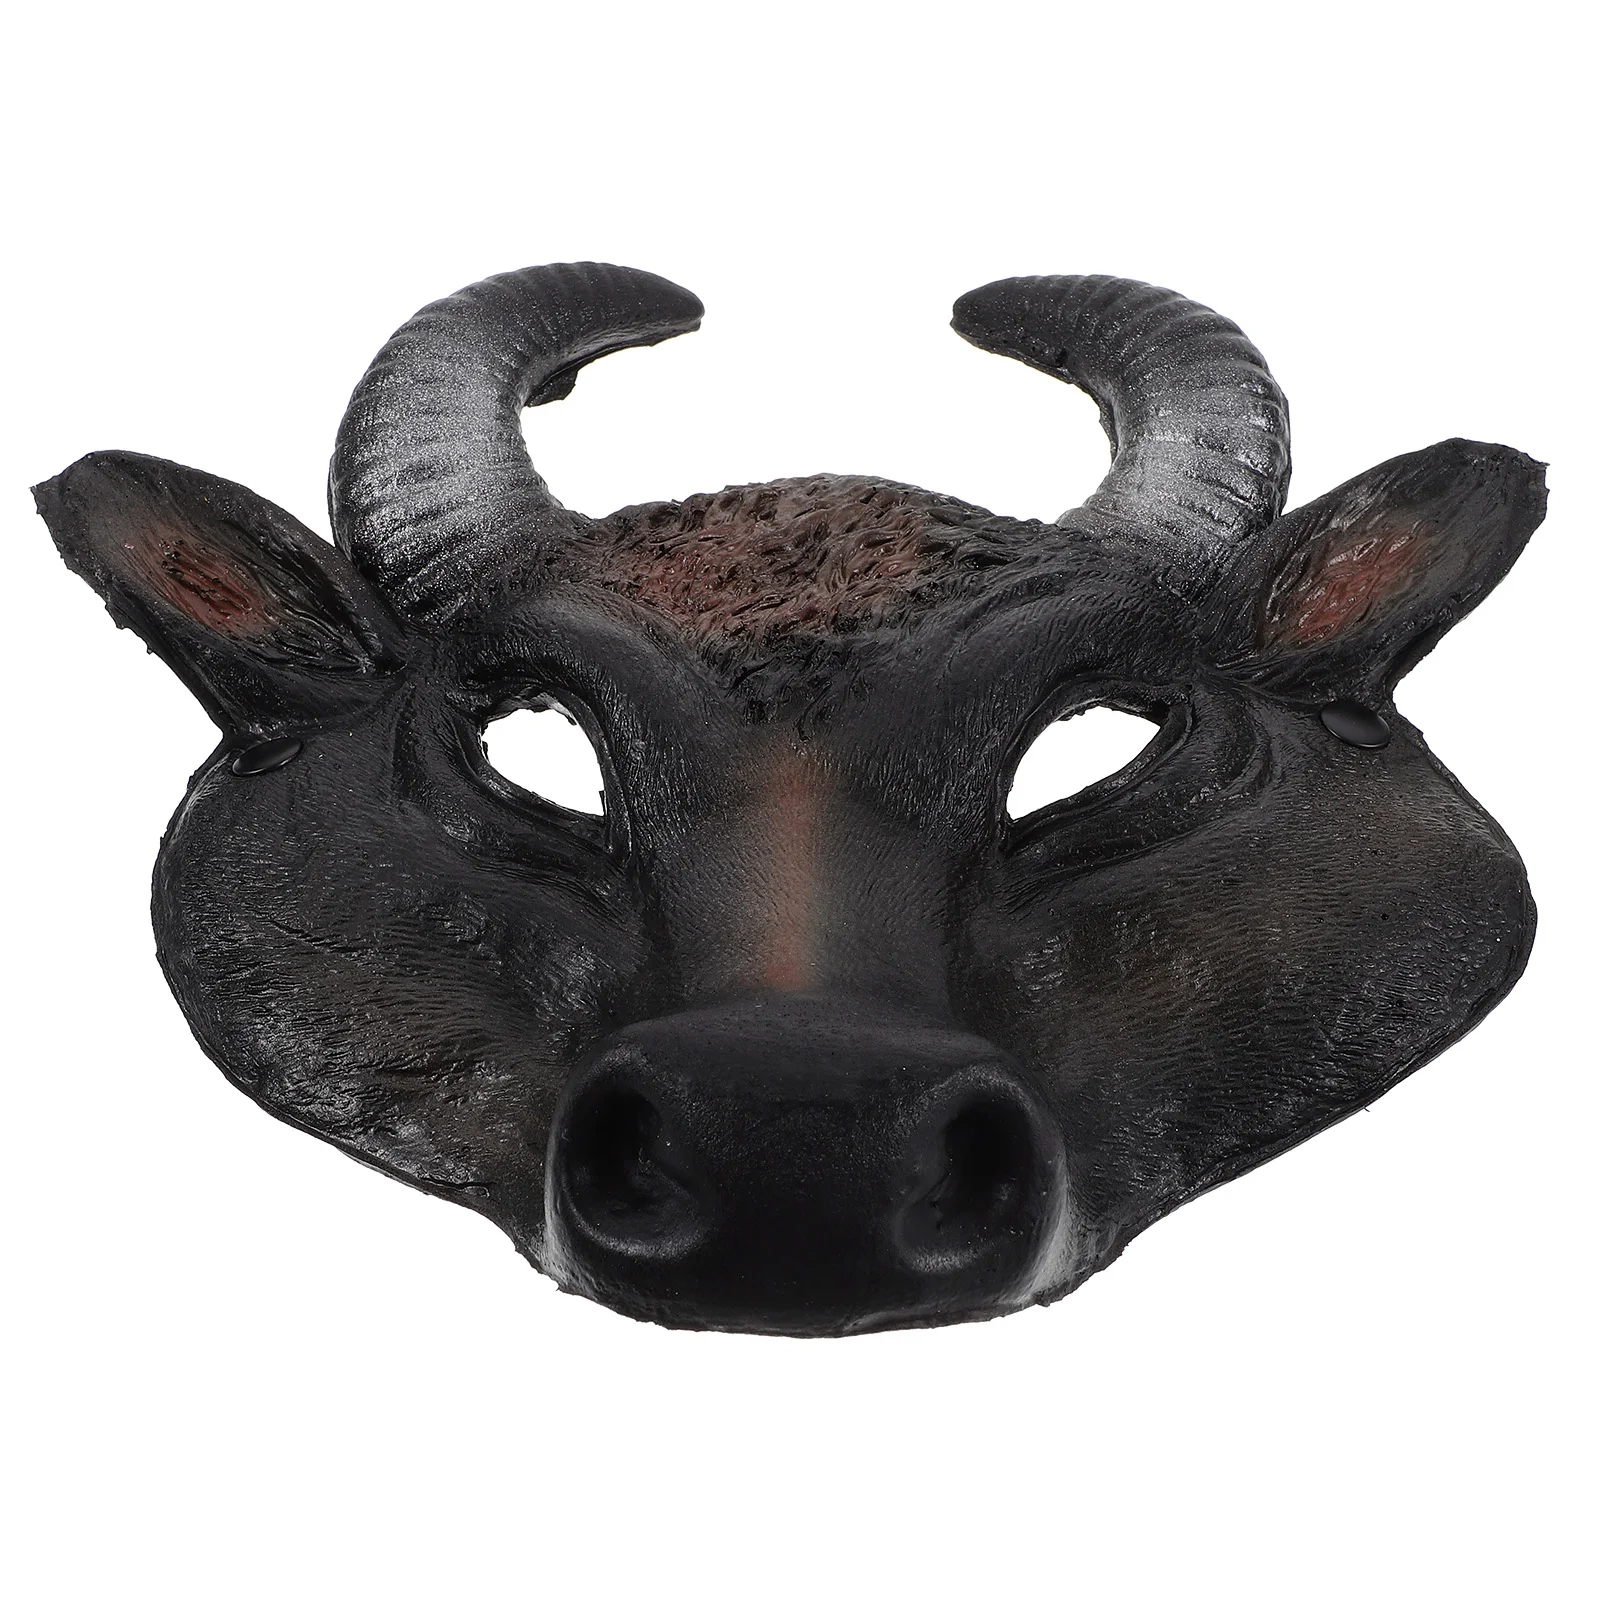 

Animal Mask Bull Half Face Mask Bull Masquerade Mask Cosplay Party Mask Accessory